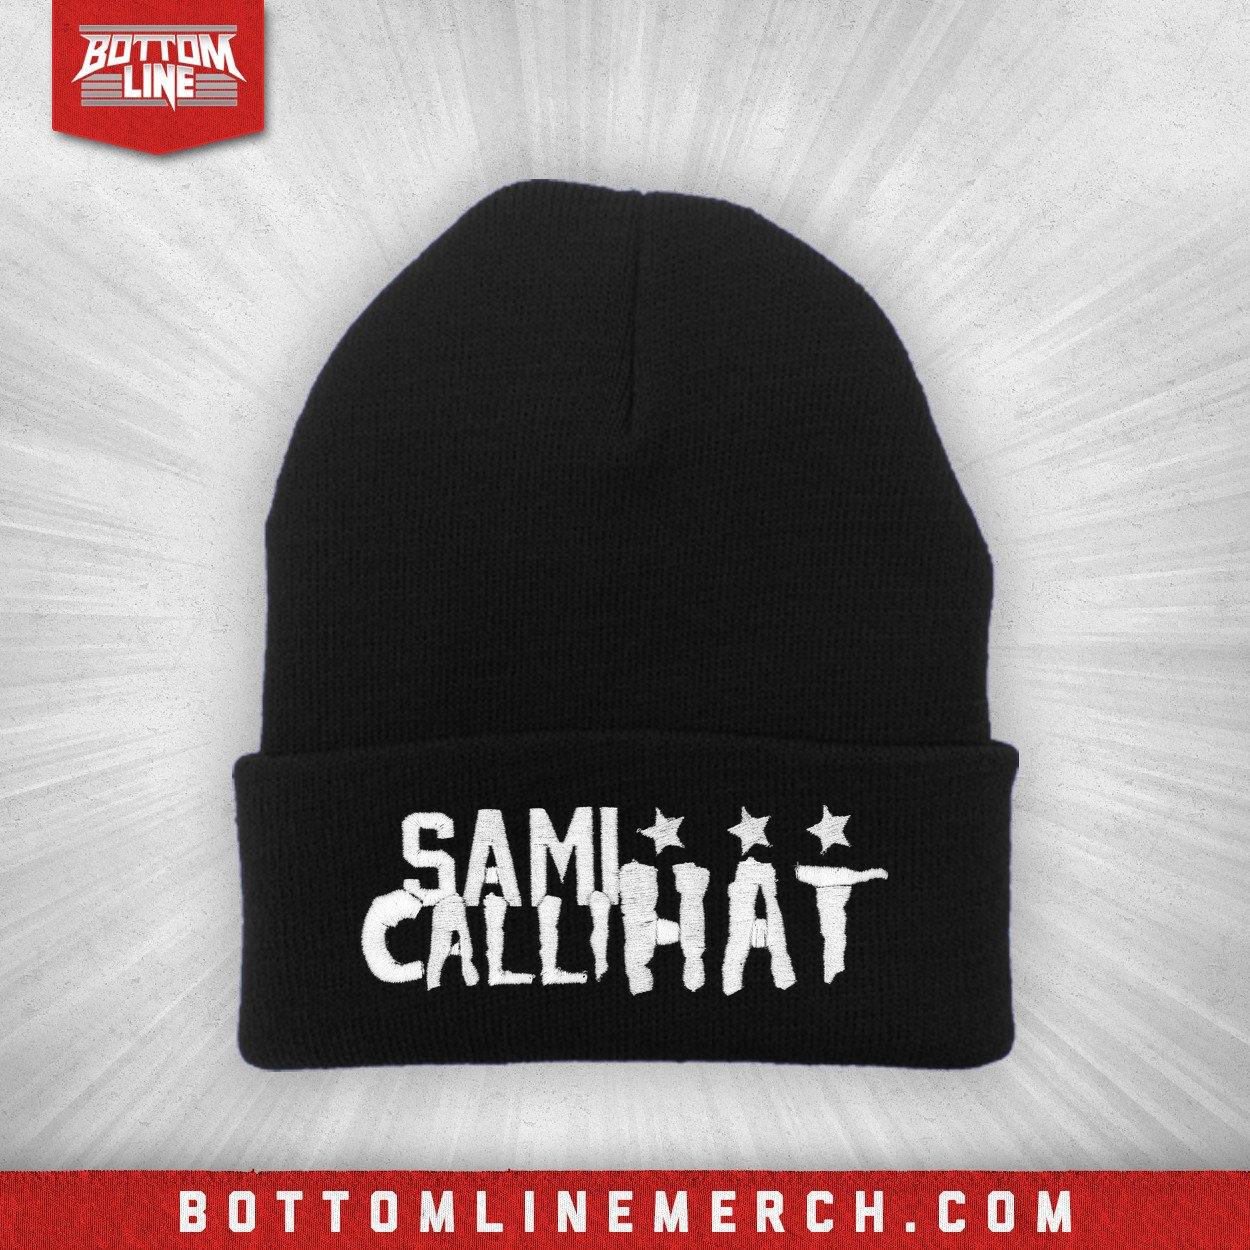 Buy Now – Sami Callihan "Callihat" Beanie – Wrestler & Wrestling Merch – Bottom Line